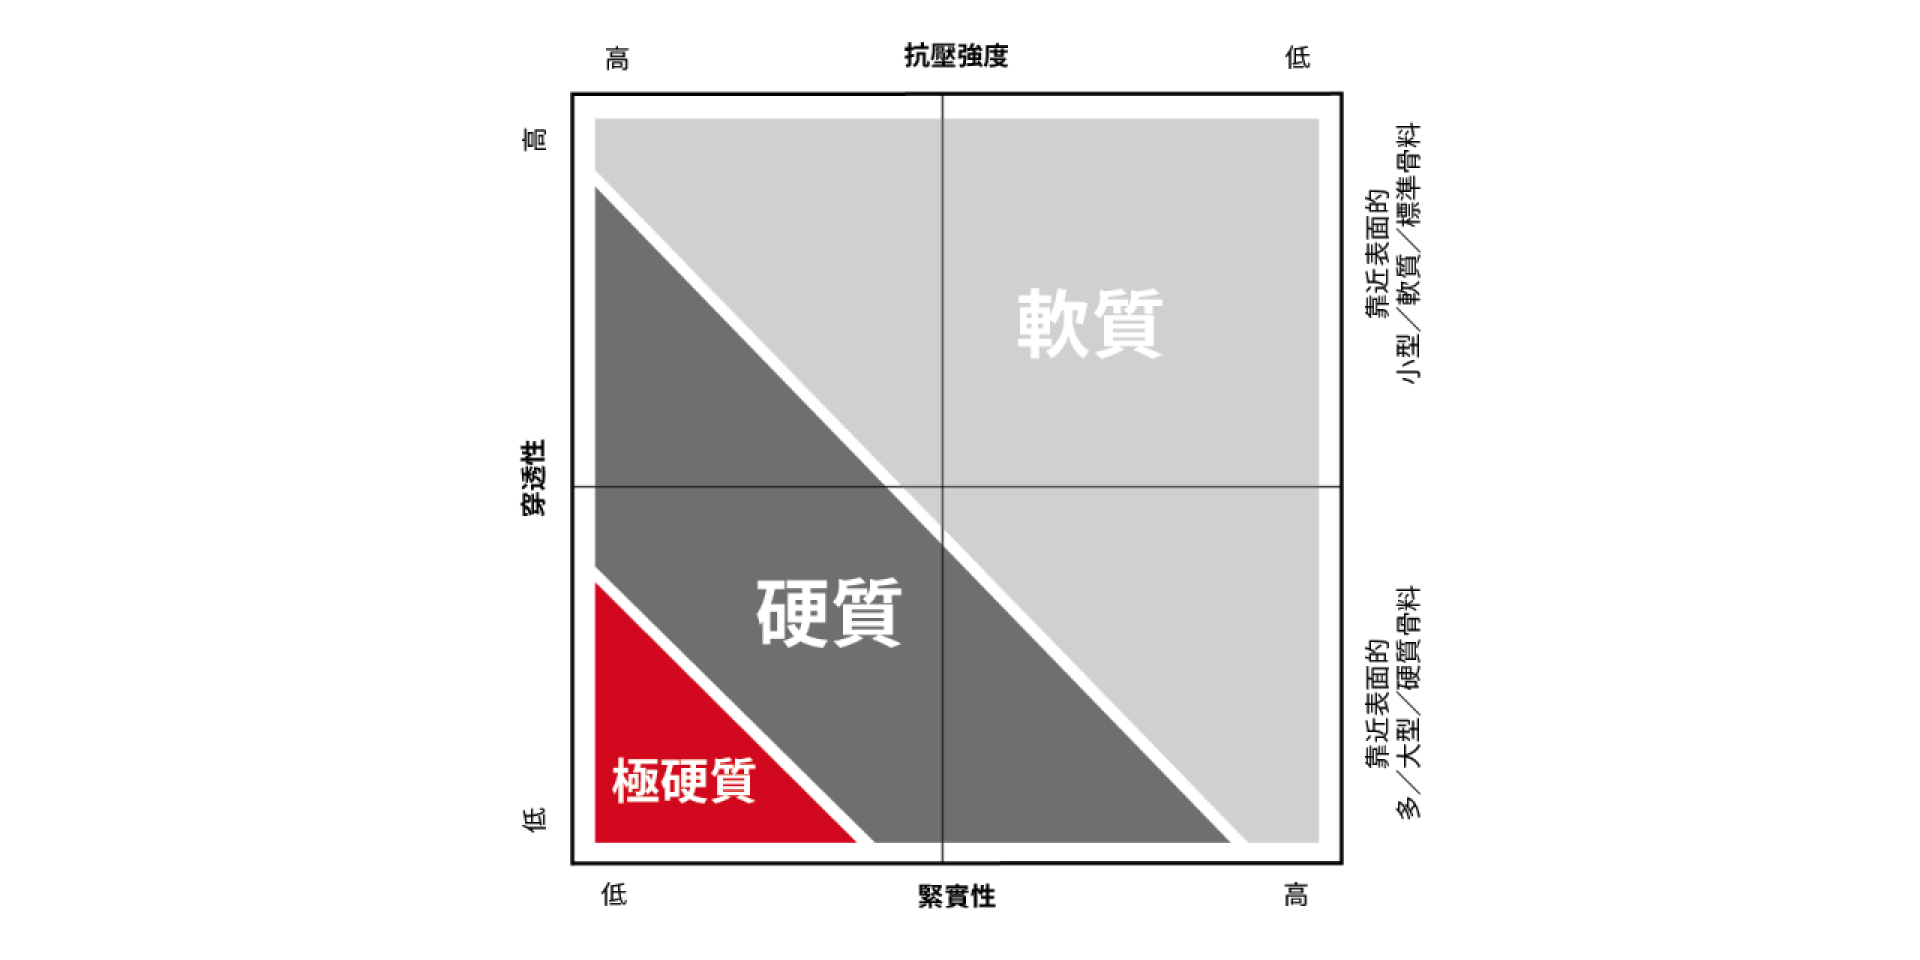 Concrete type chart